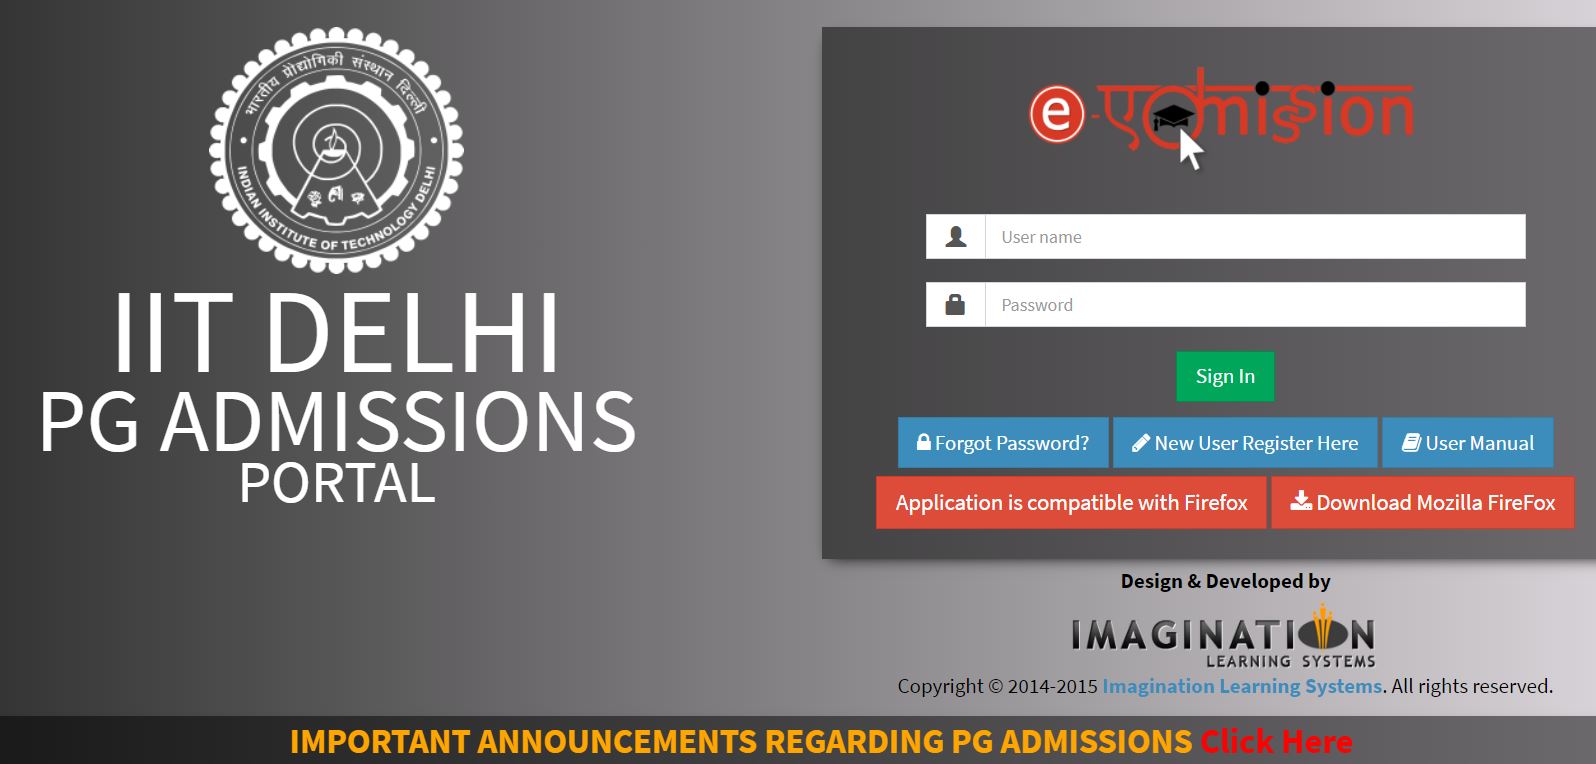 IIT Delhi PHD Admission Portal